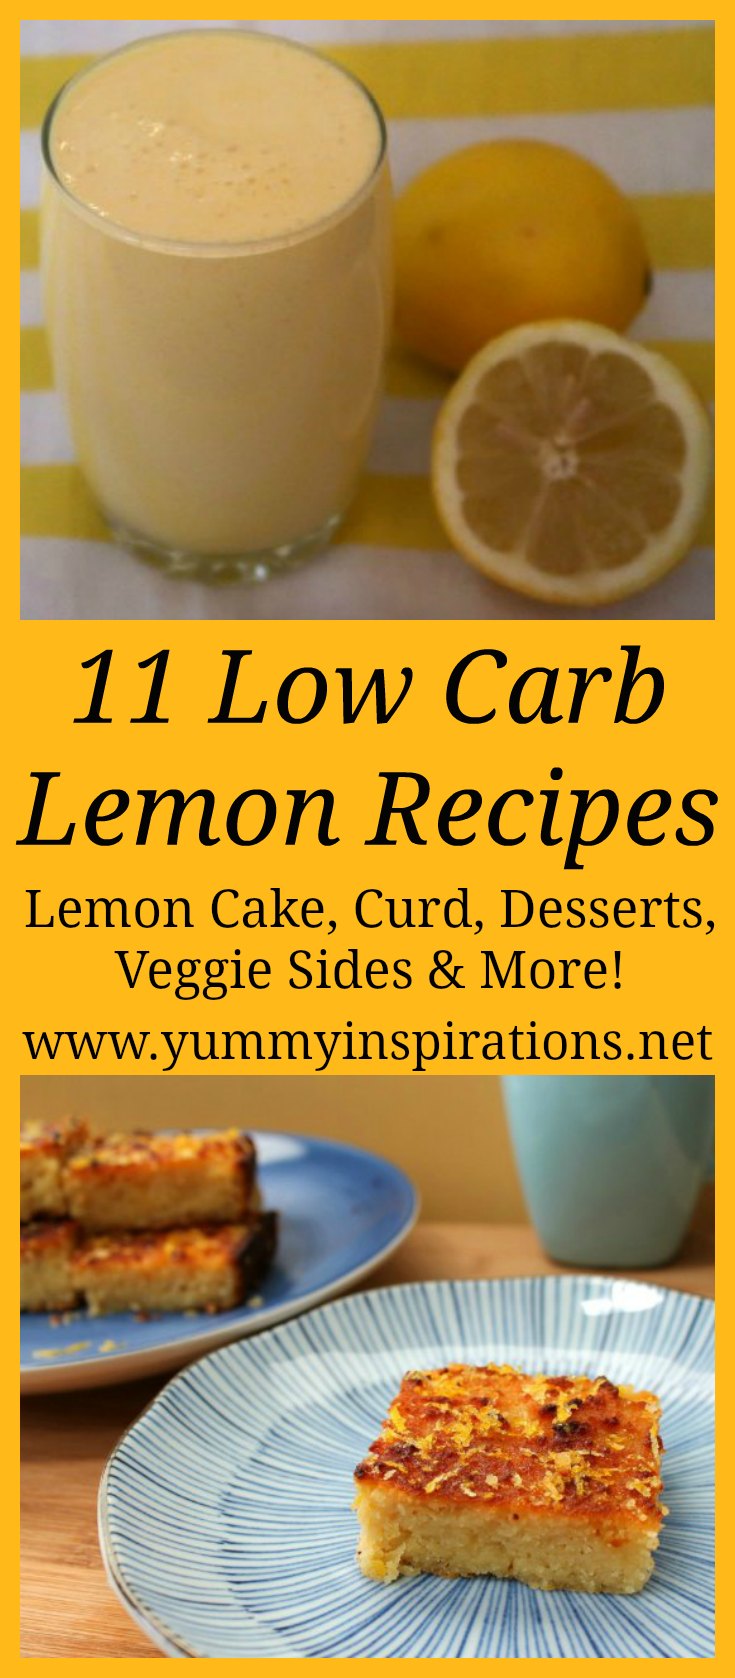 11 Low Carb Lemon Recipes - Easy Keto Gluten Free Lemon Desserts, Salads, Smoothies & Sides including lemon cake, curd & mousse.